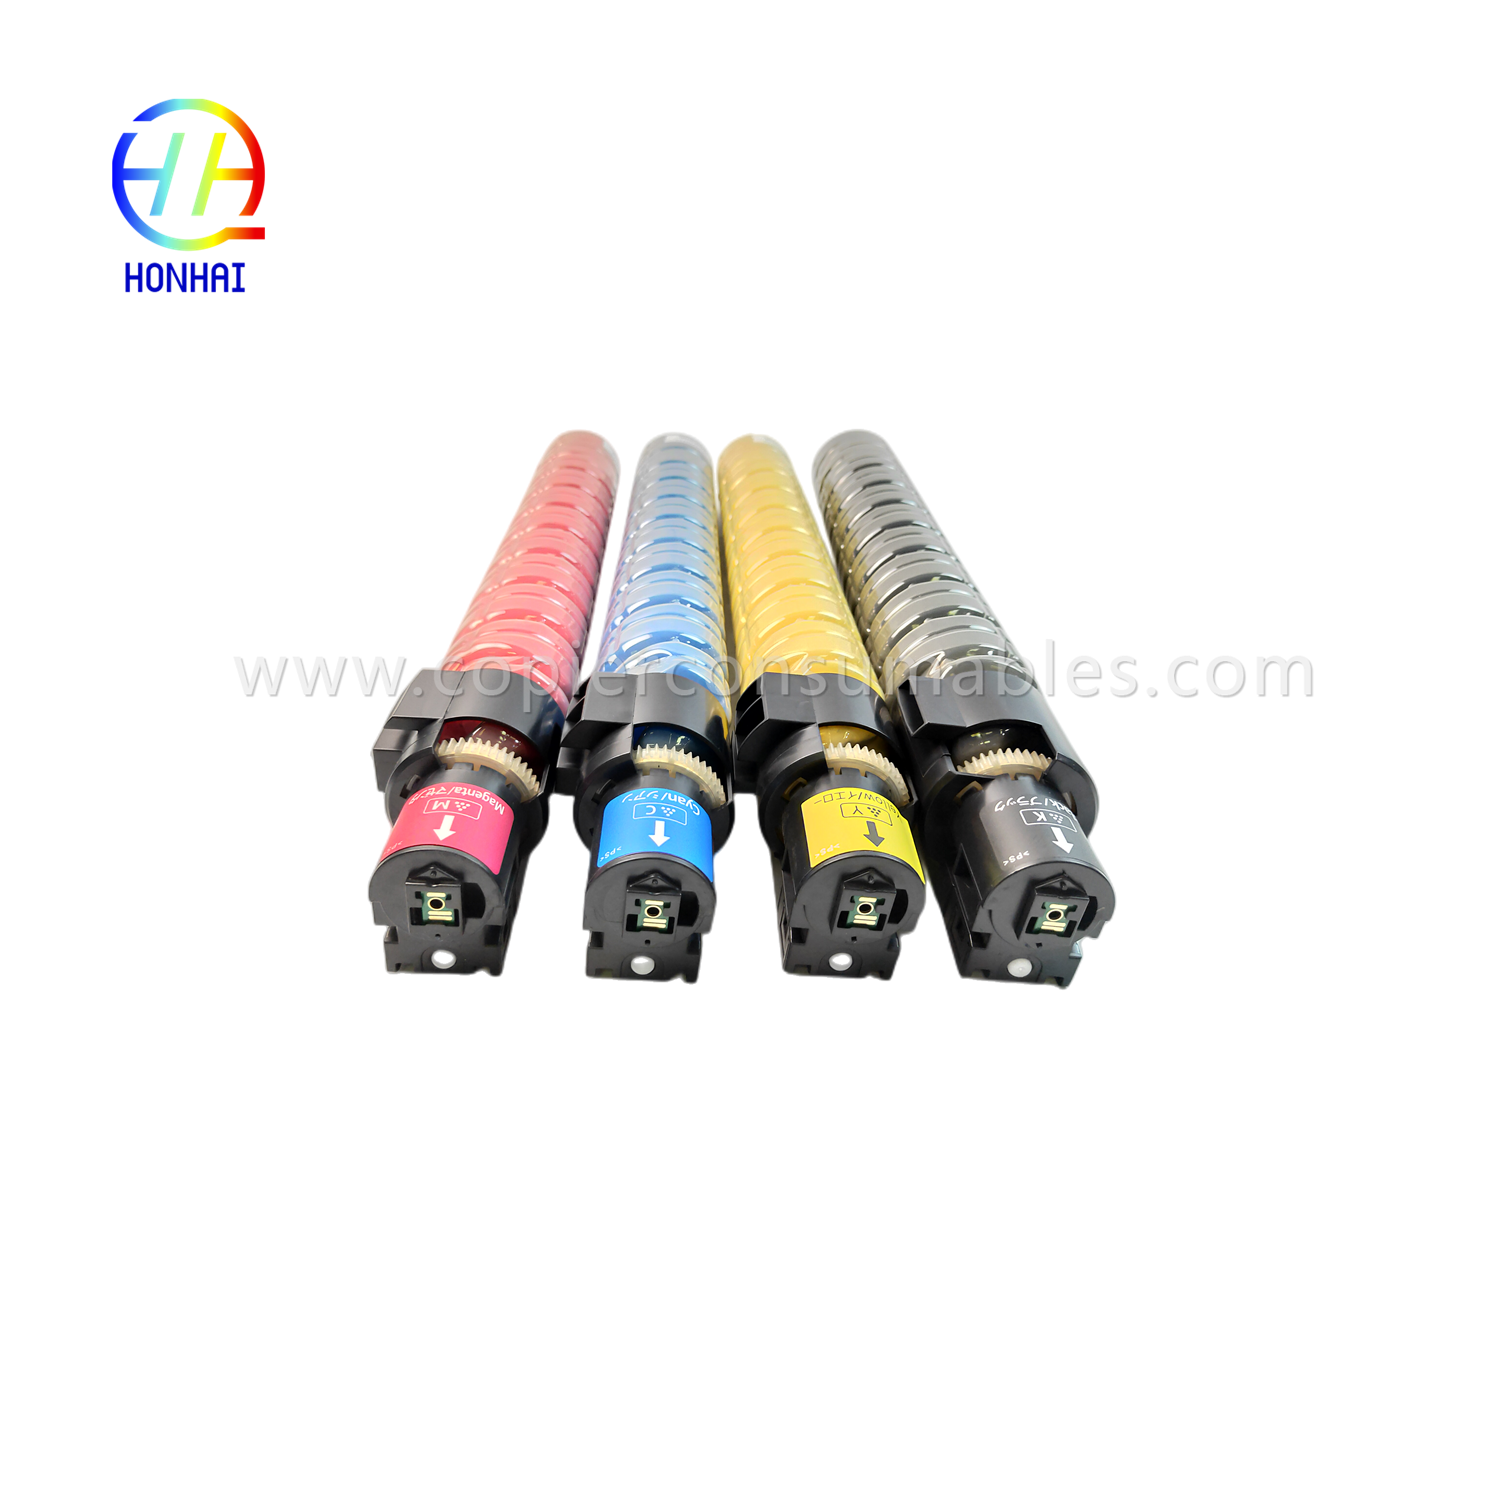 Tinte Cartridge Set for MPC3002 MPC3502 842016 842017 842018 842019 (2)